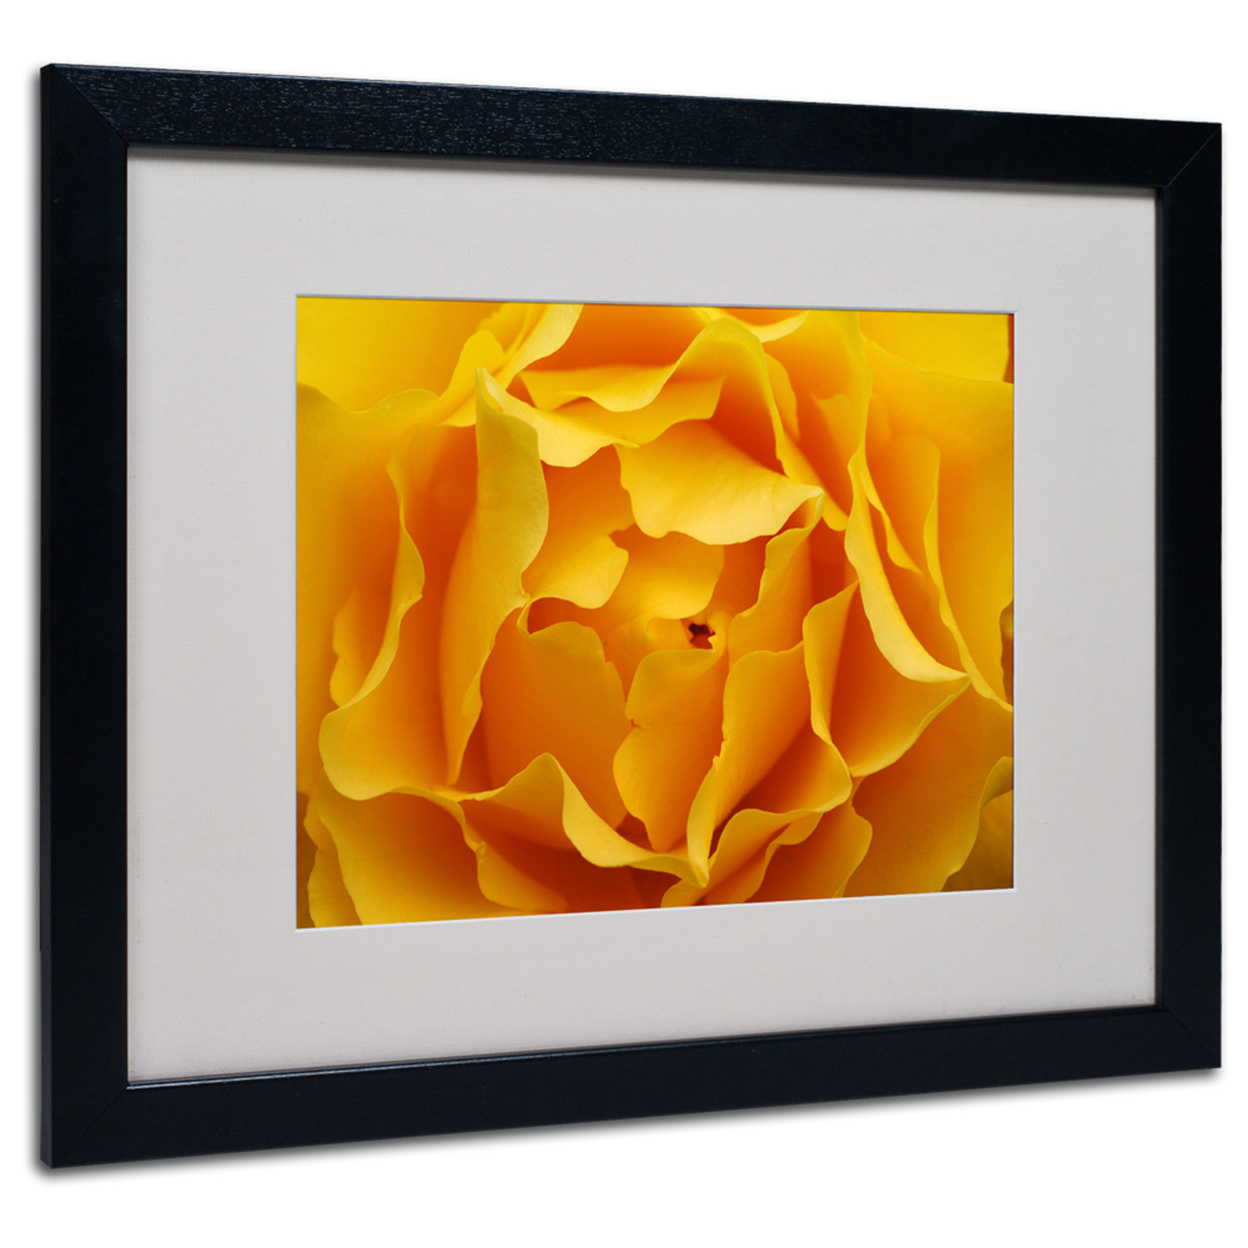 Kurt Shaffer 'Hypnotic Yellow Rose' Black Wooden Framed Art 18 X 22 Inches